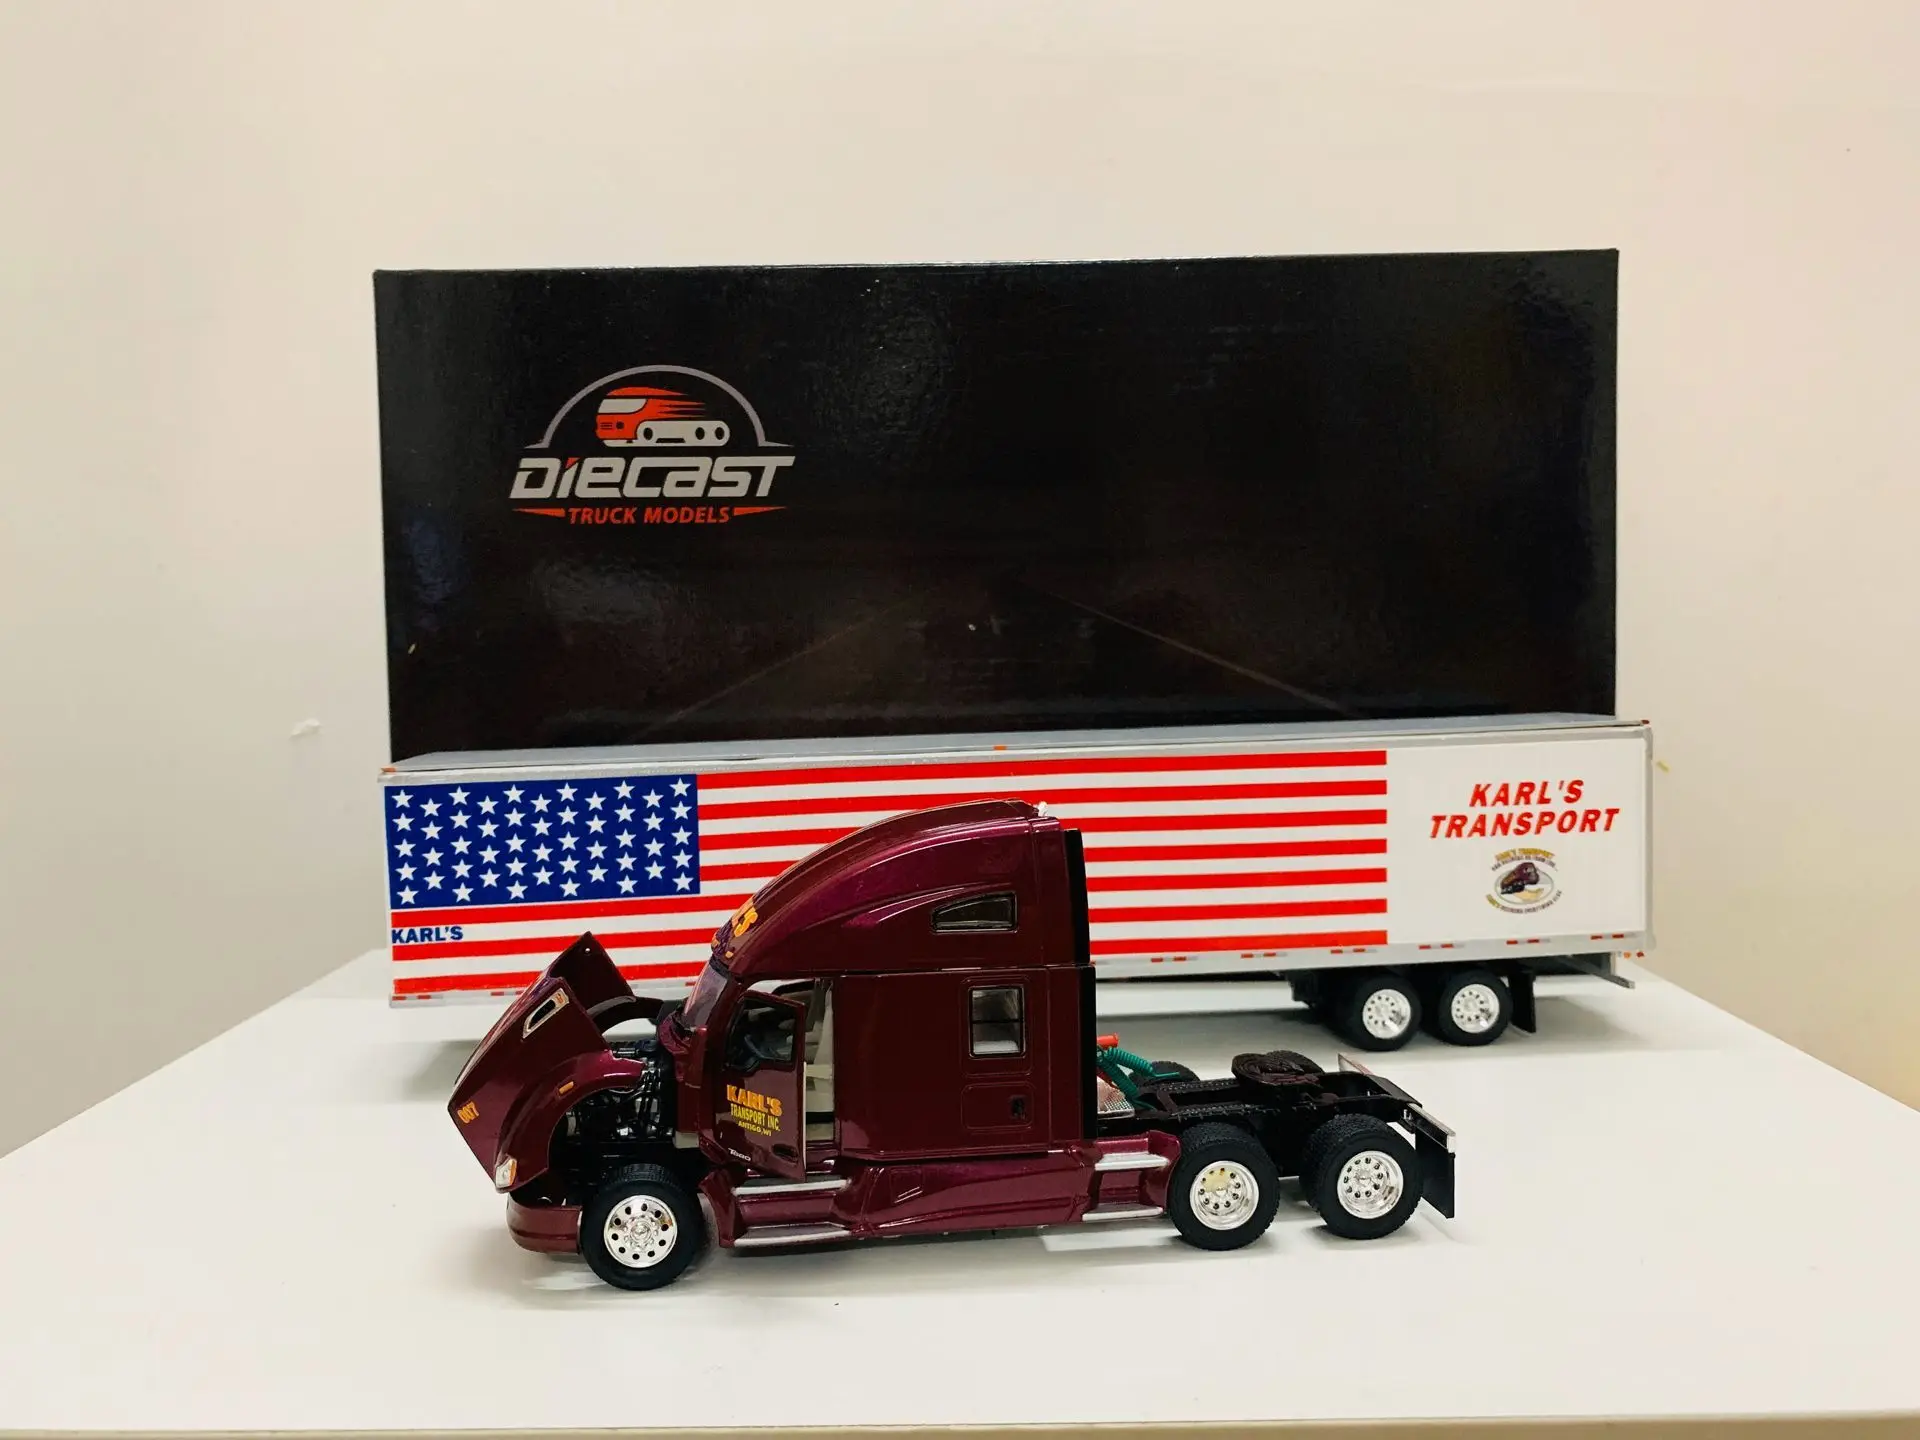 Tonkin Replicas Karl's Transport DieCast Truck Models 1:53 Scale New in Box